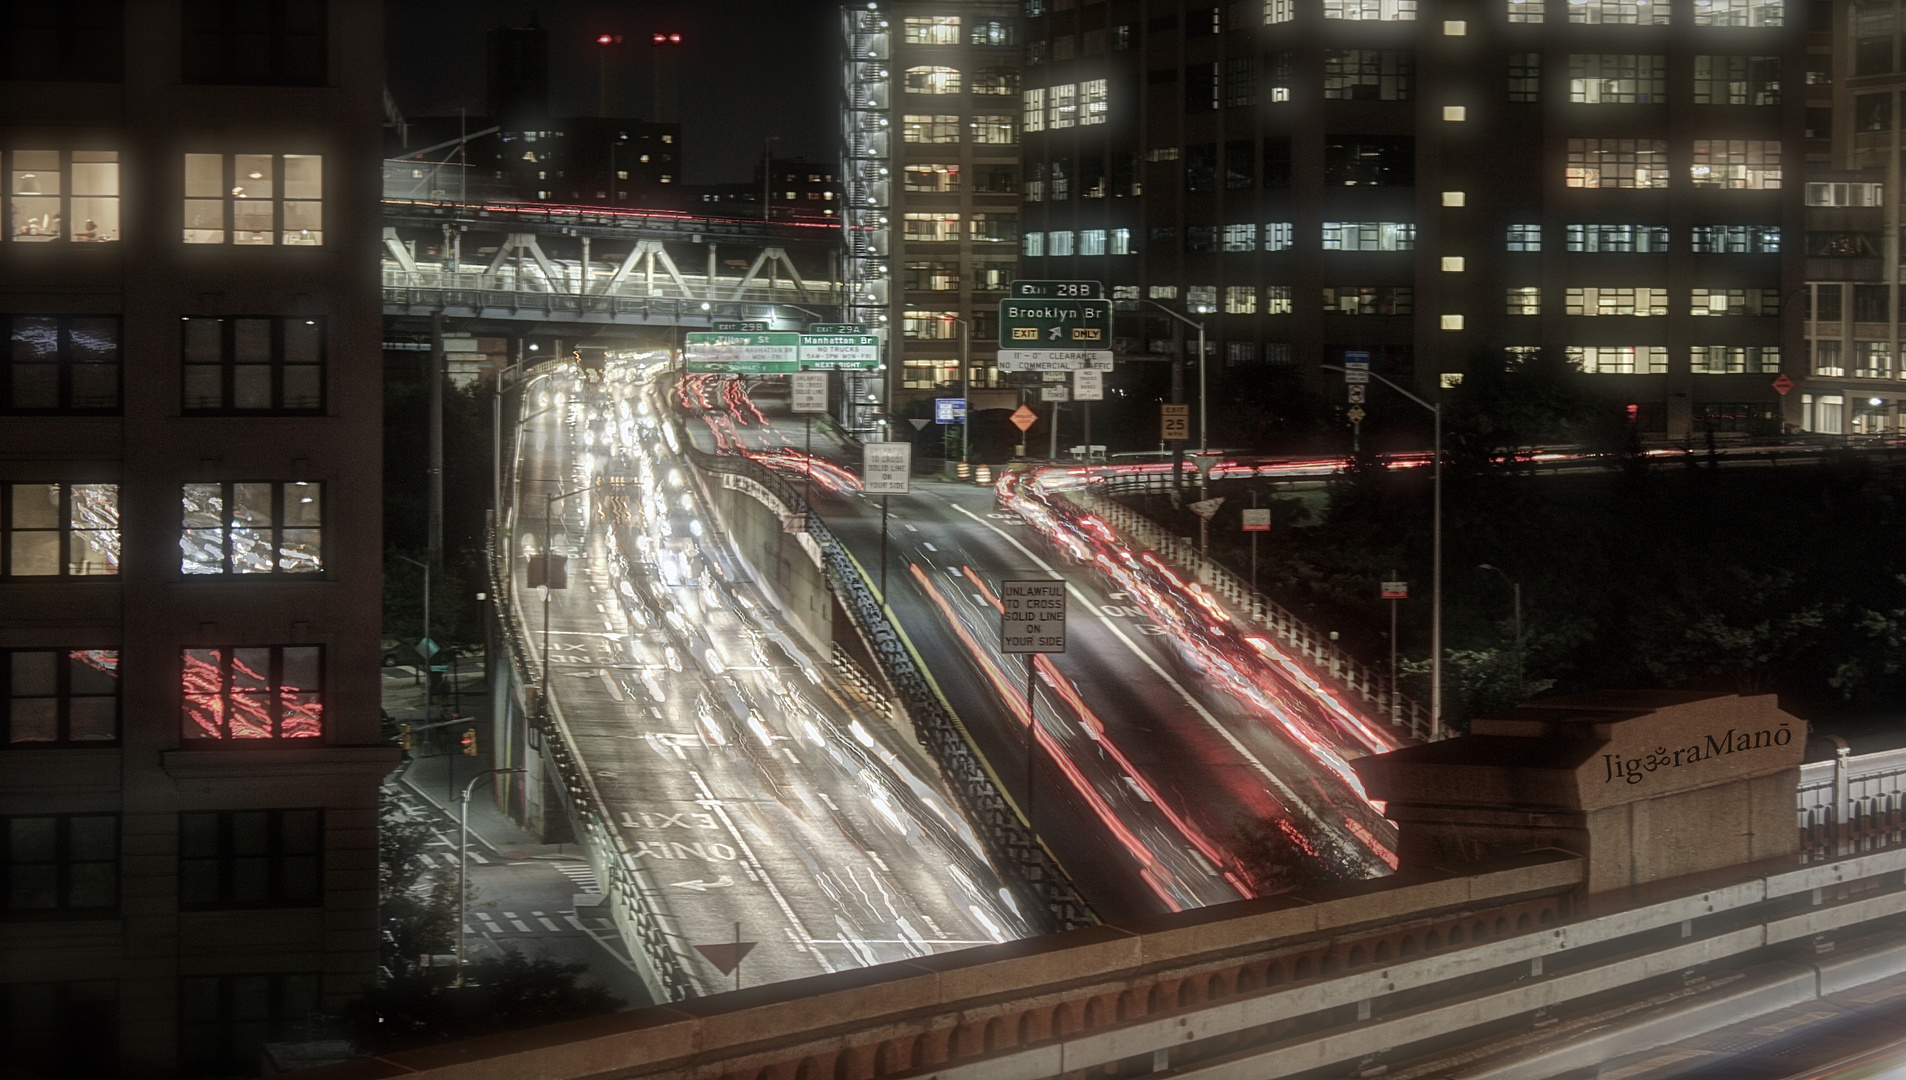 shutter-car-speed + night-exposure..